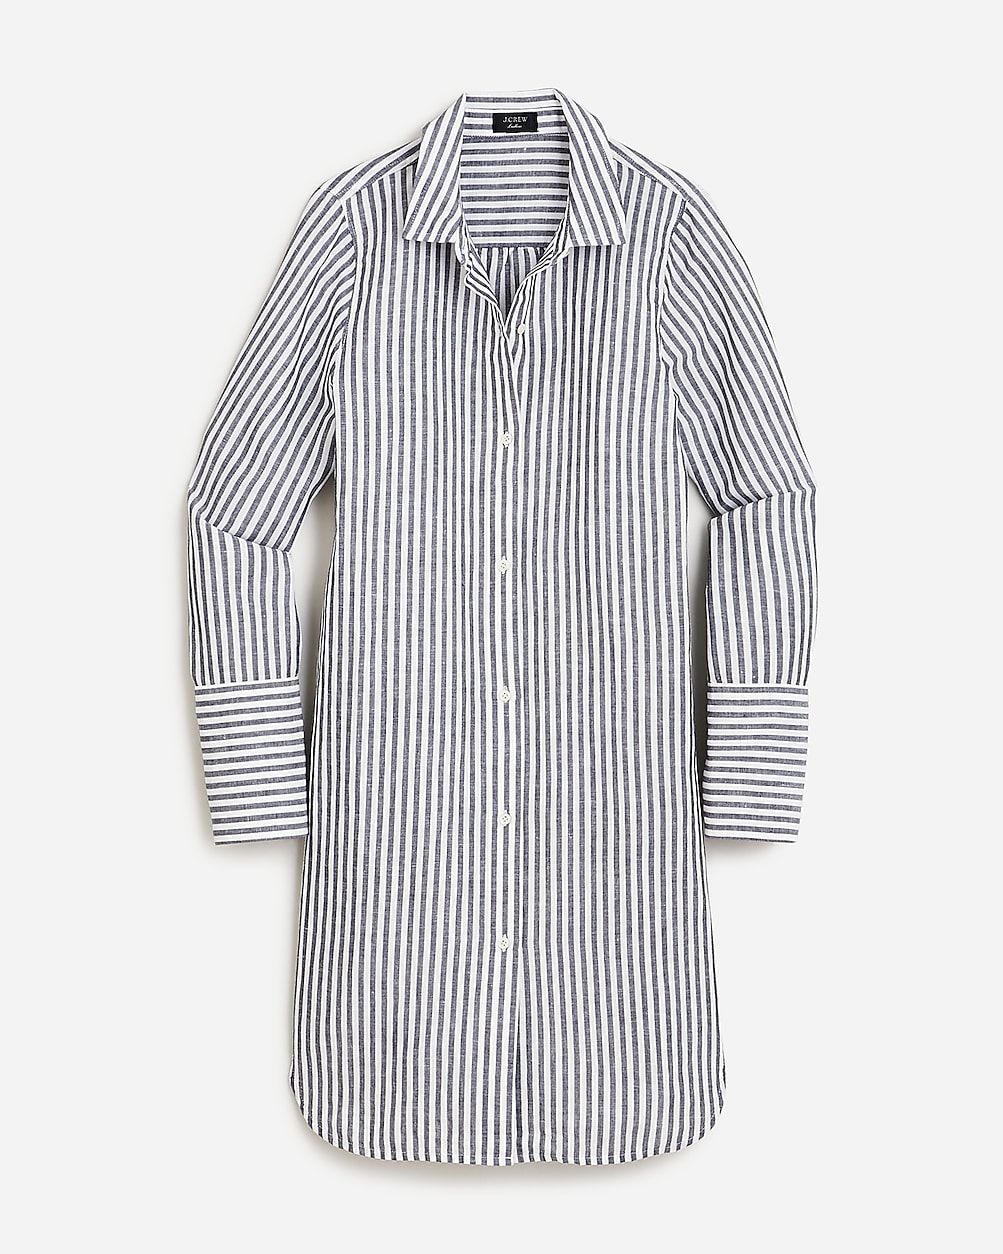 Classic-fit beach shirt in striped linen-cotton blend | J.Crew US